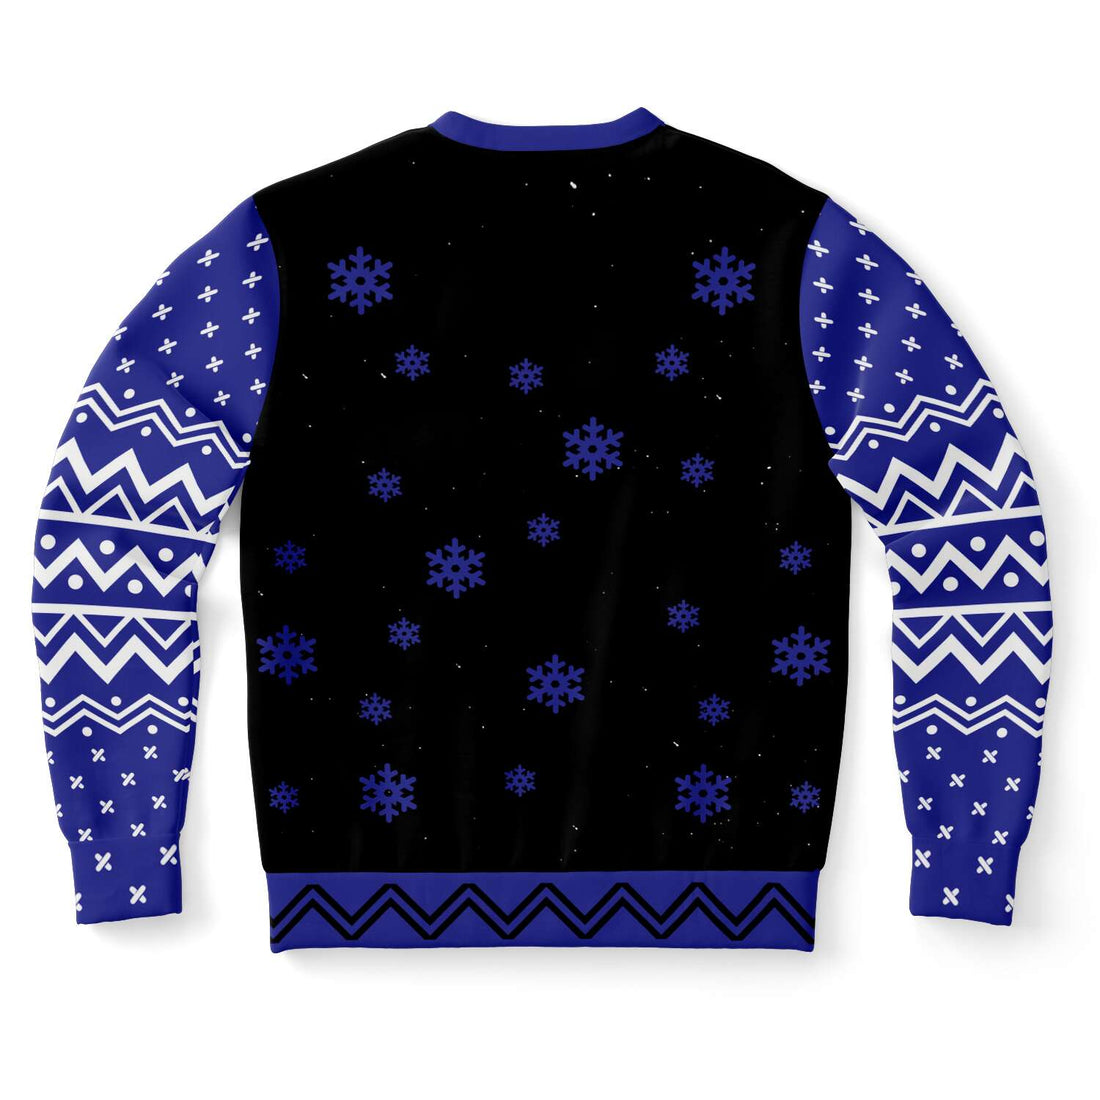 Subliminator Merry Guitamas Ugly Christmas Sweater Sweatshirt